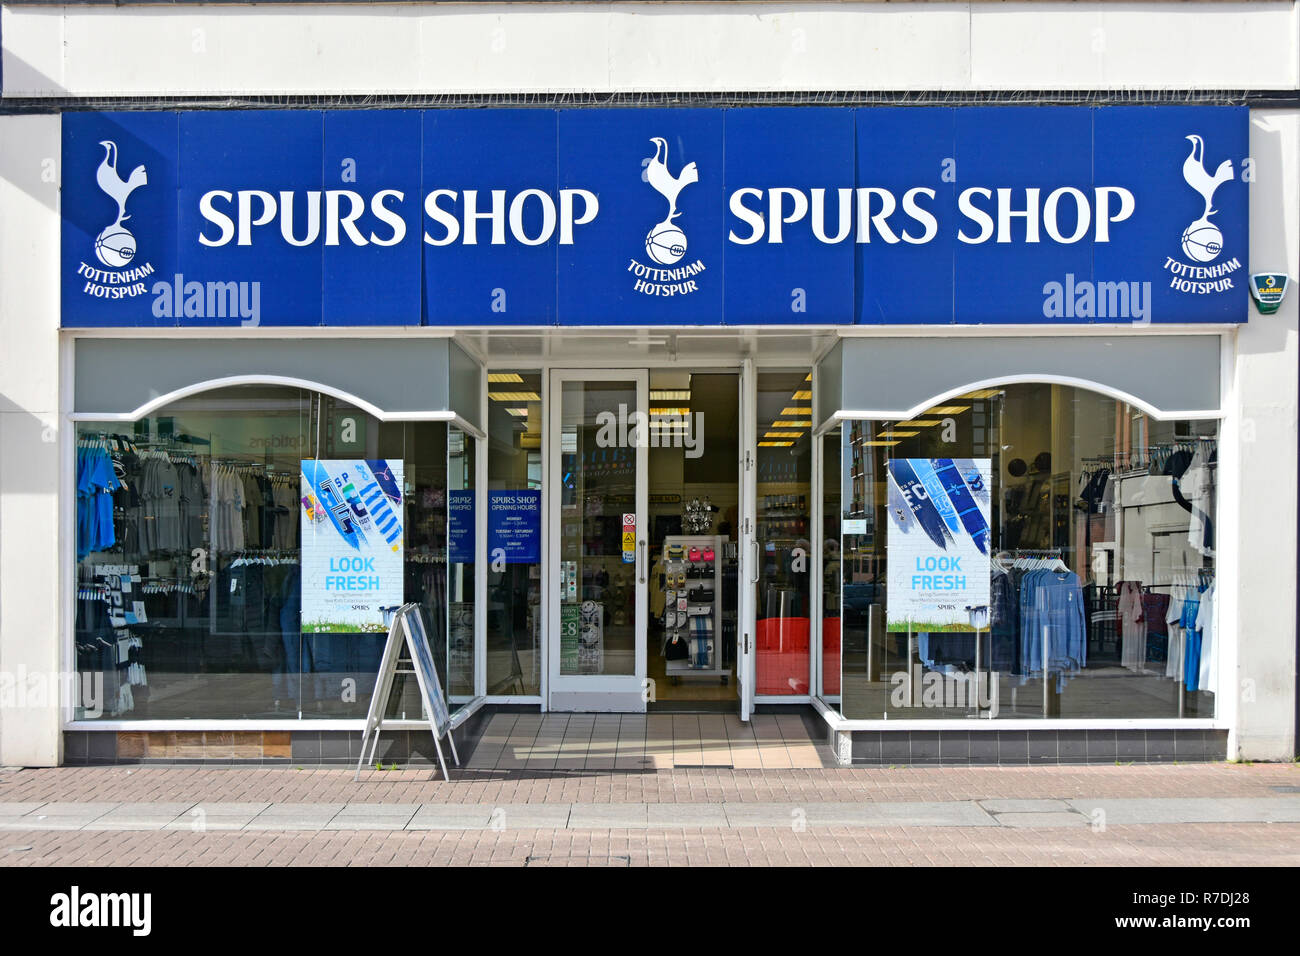 Smelte Helligdom repertoire Tottenham Hotspur premier league football club retail sports shop front  window for business selling Spurs football kit & fans memorabilia Southend  UK Stock Photo - Alamy